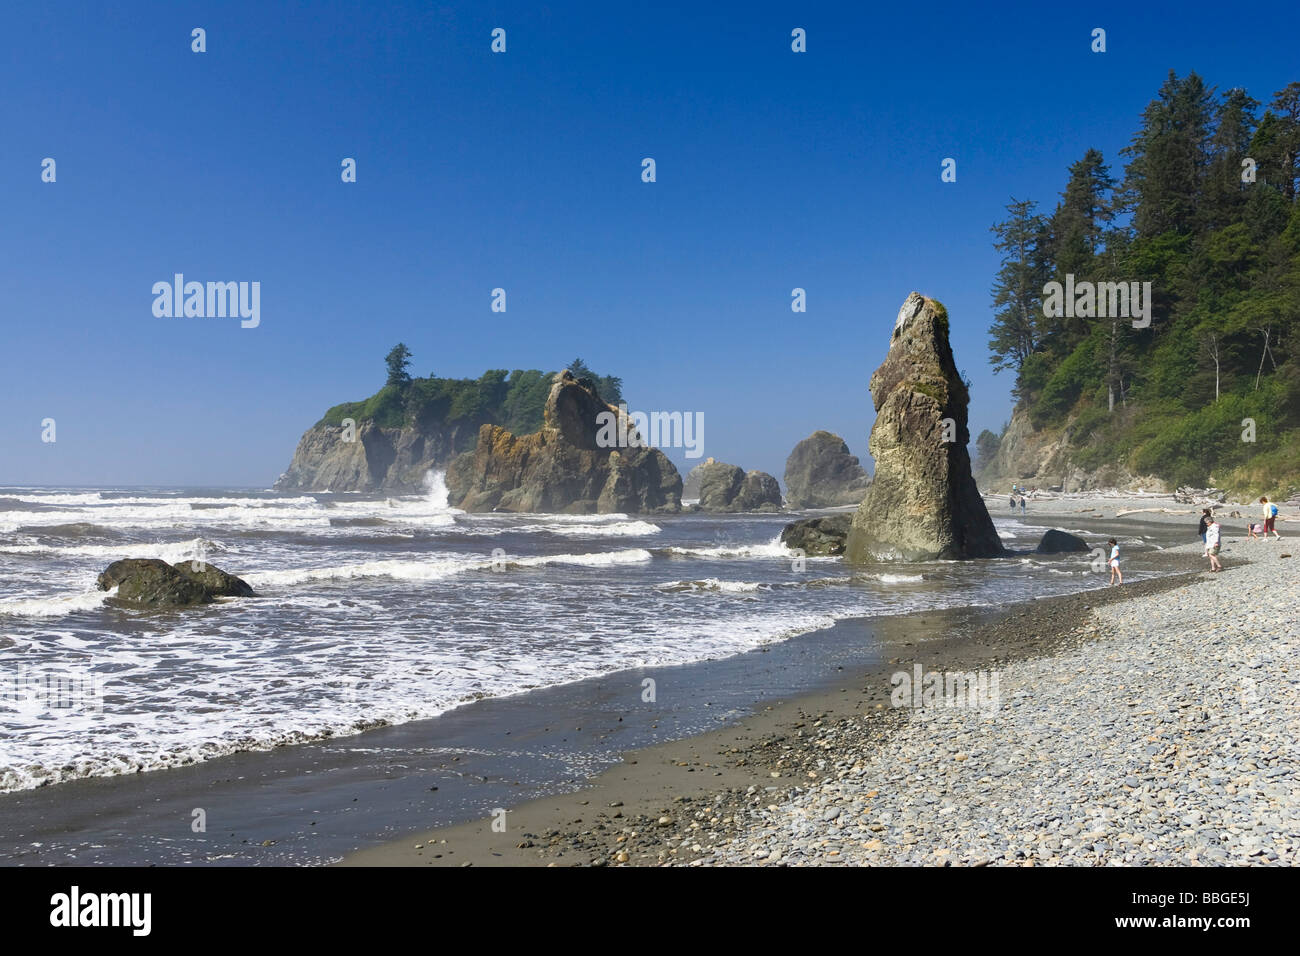 West Coast, Pacific, Olympic Peninsula, Washington, USA Stock Photo